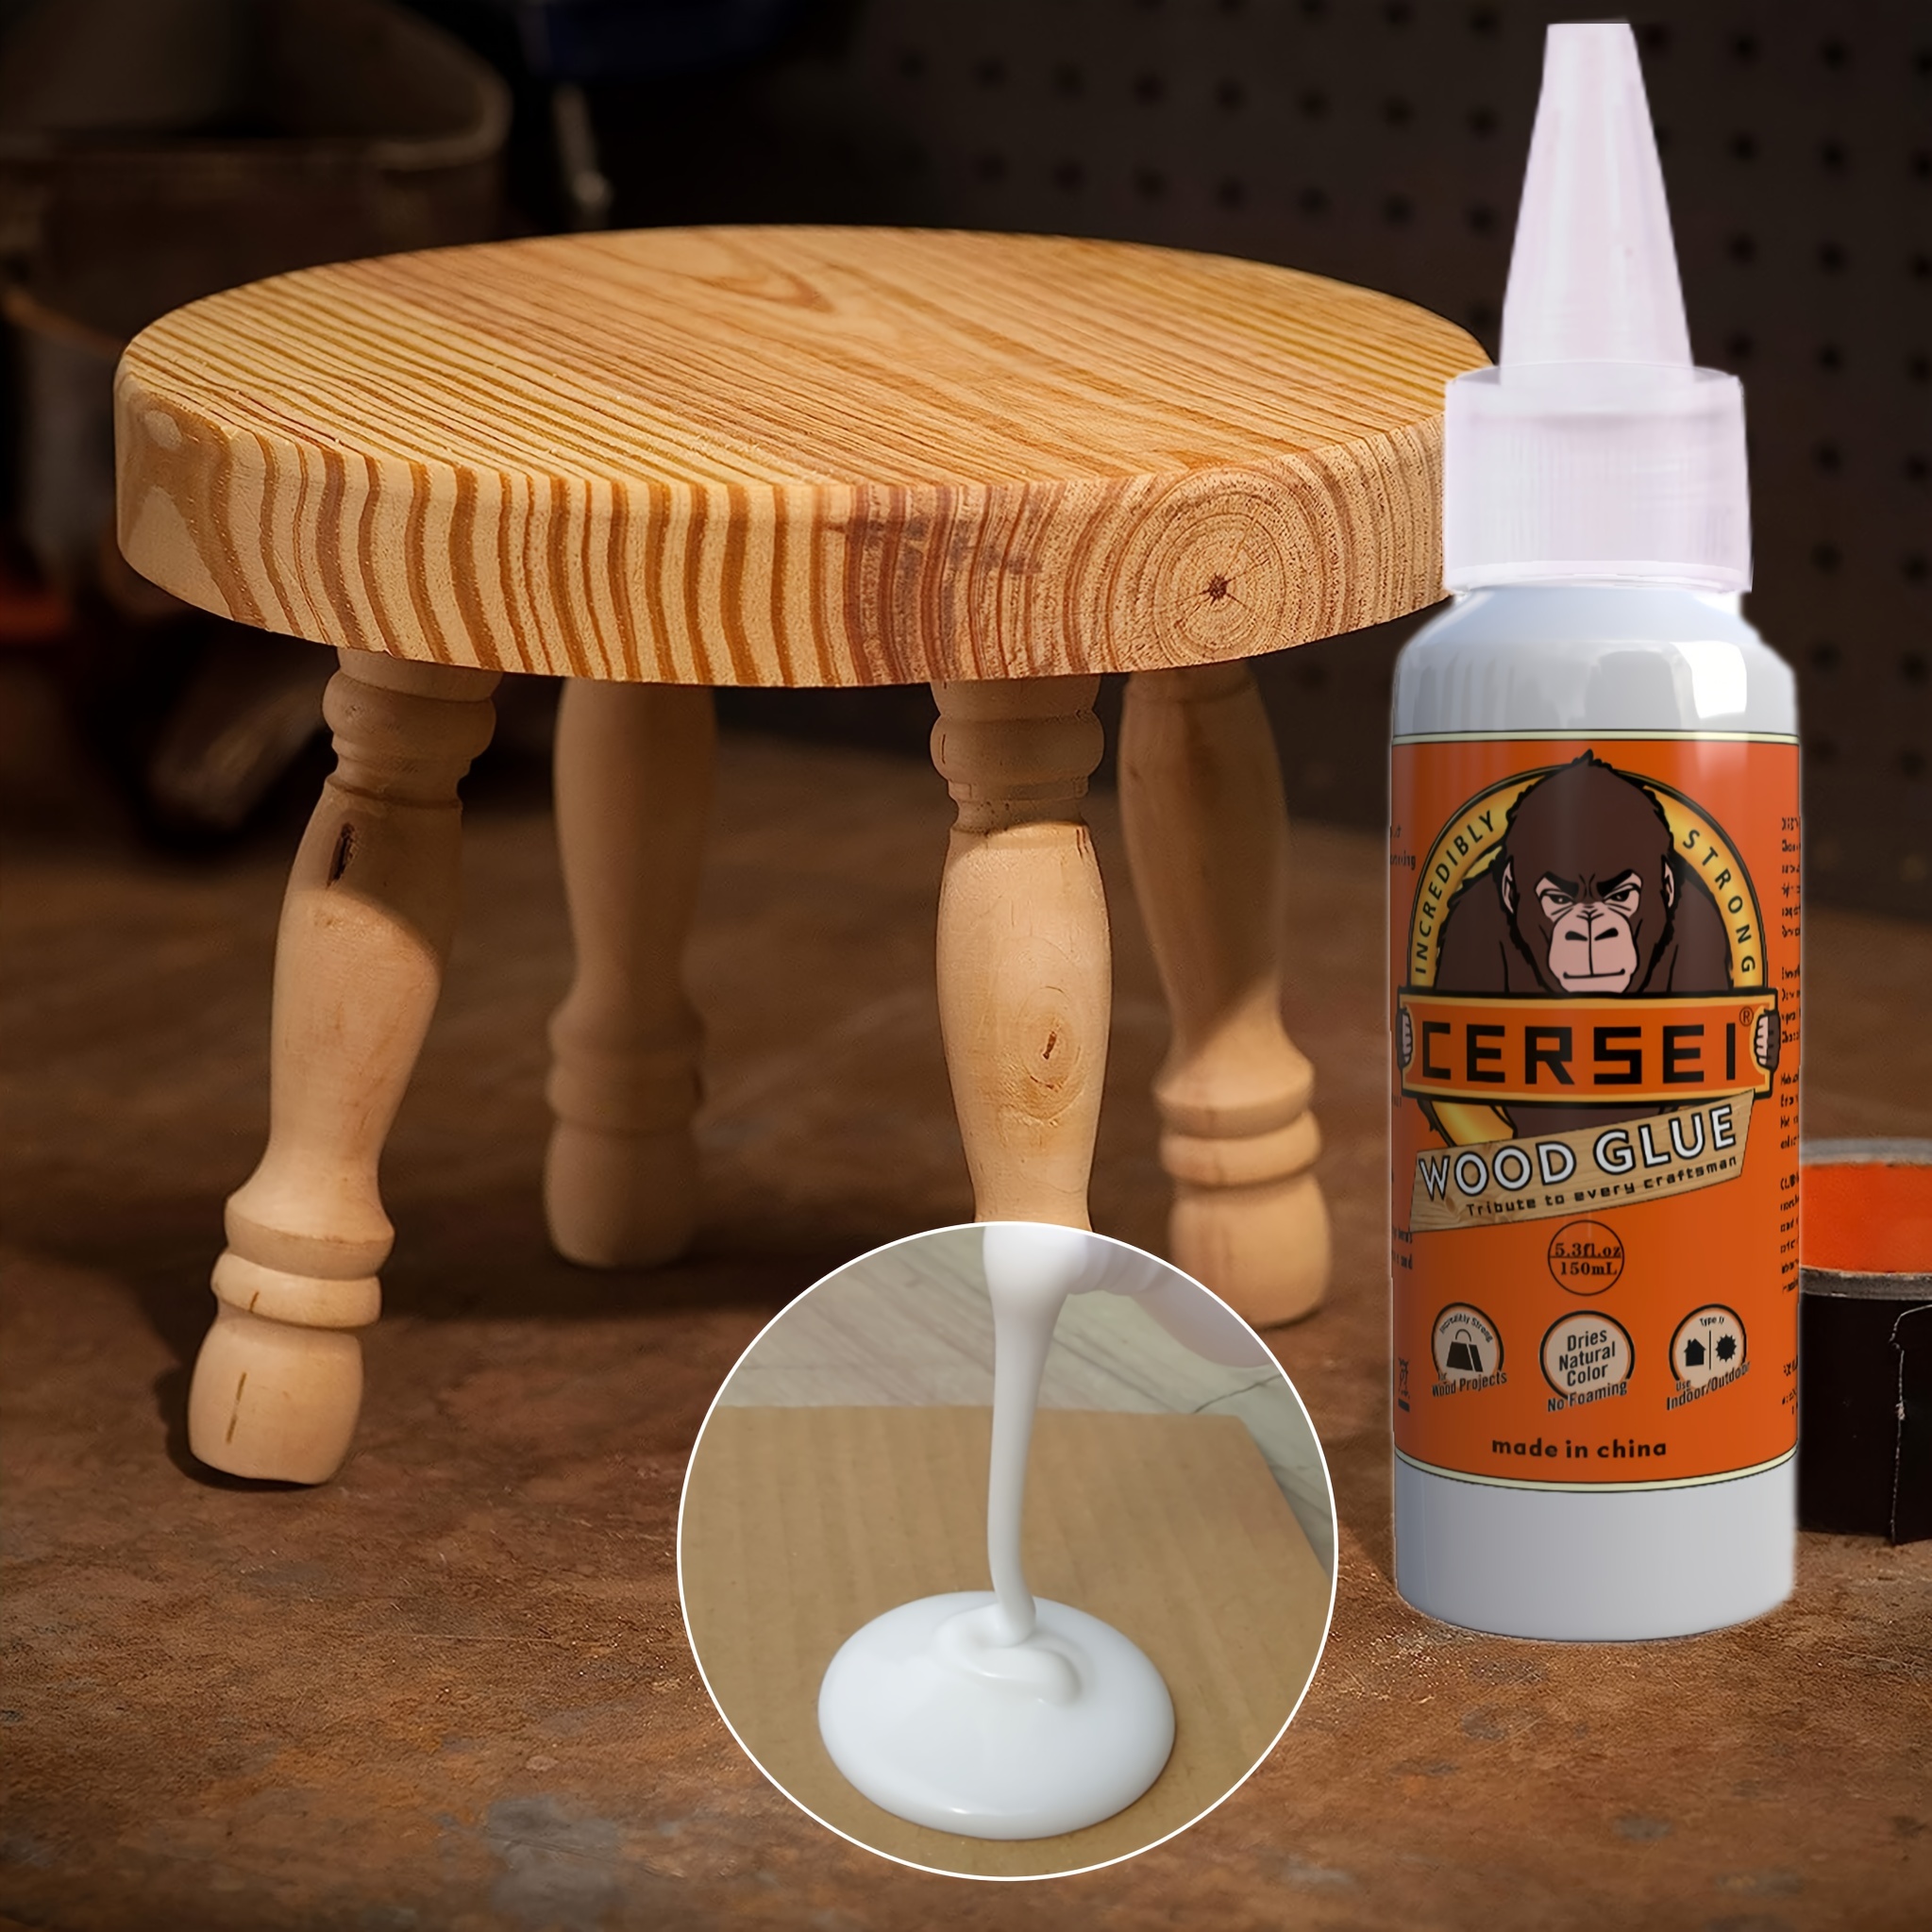 Gorilla Enhanced version Woodworking Glue Quick Drying Super Strength  Bonding Super Adhesive Waterproof Safe Natural Color